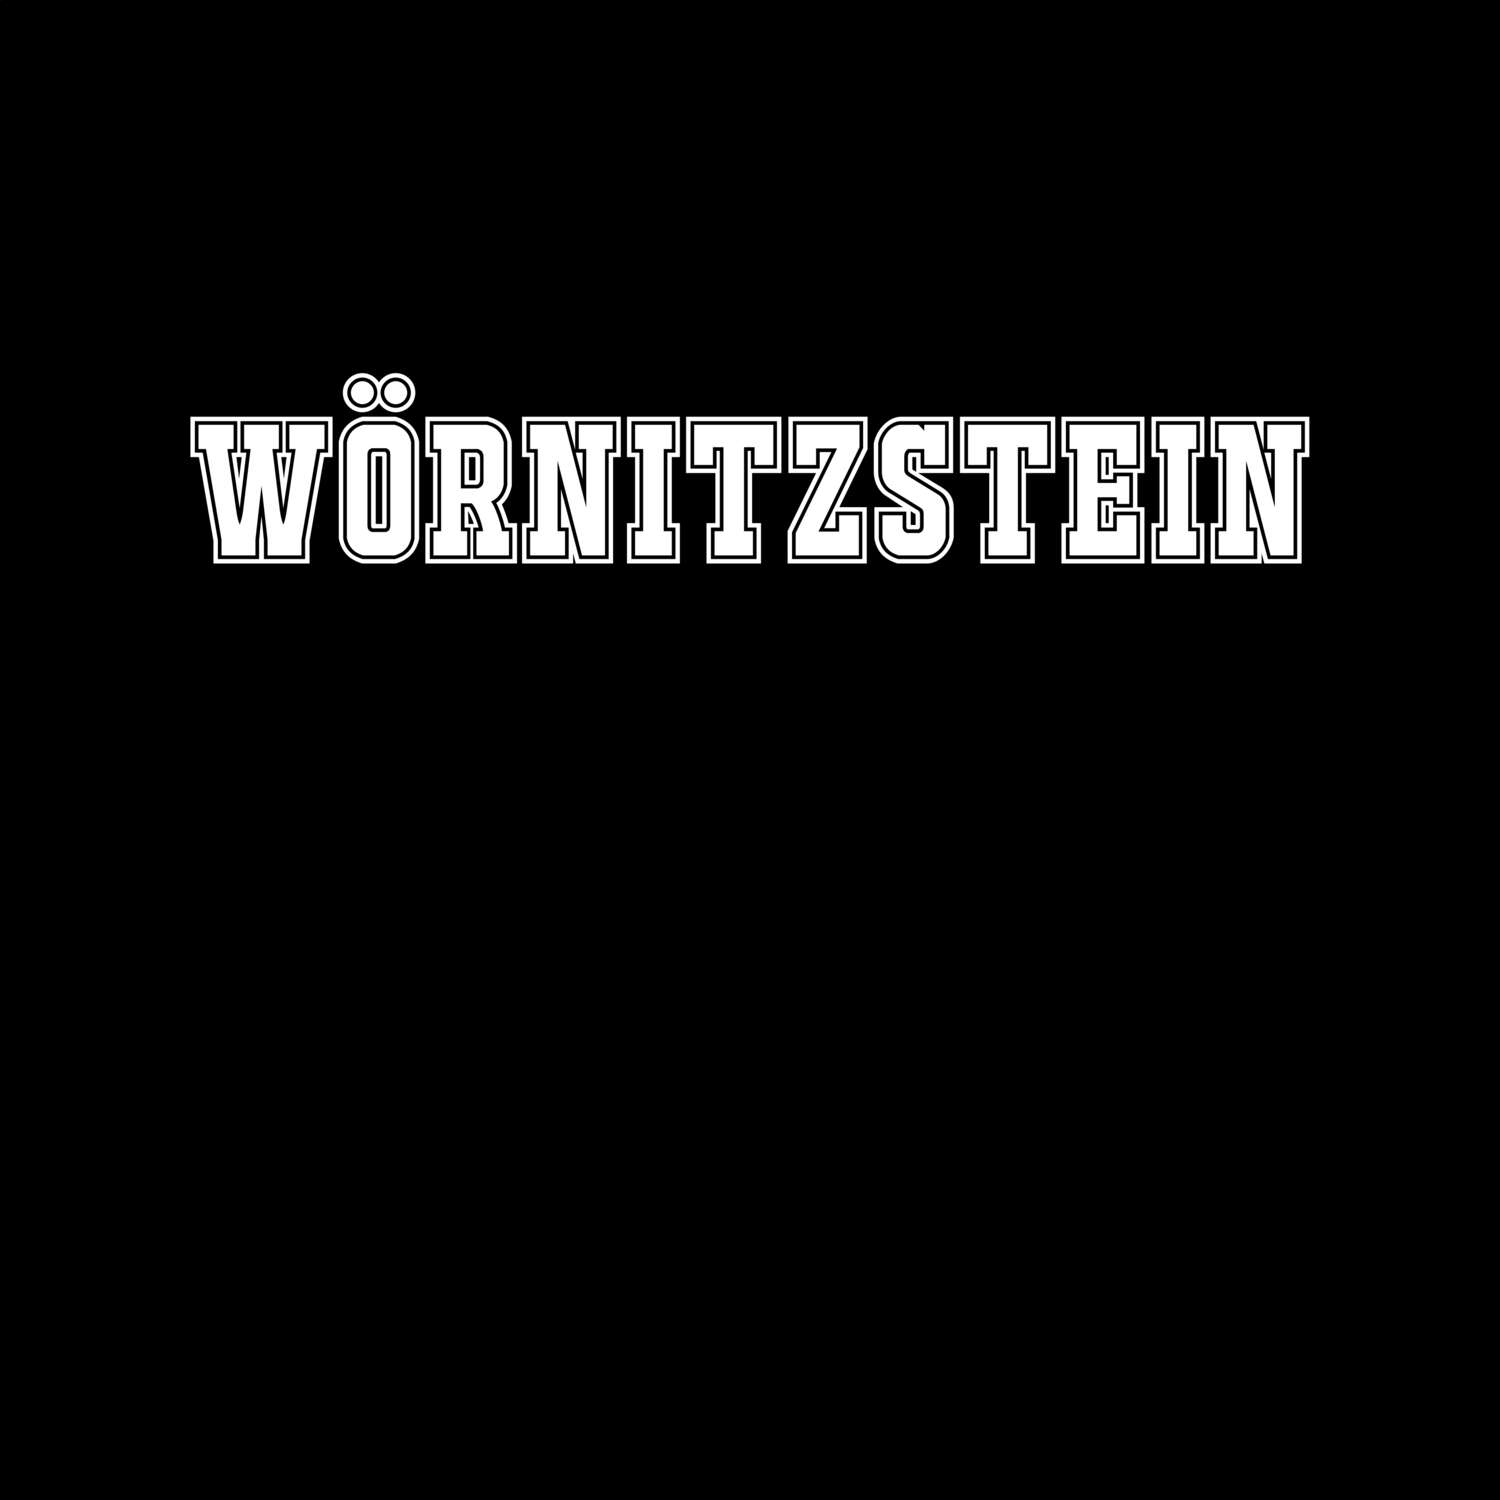 Wörnitzstein T-Shirt »Classic«